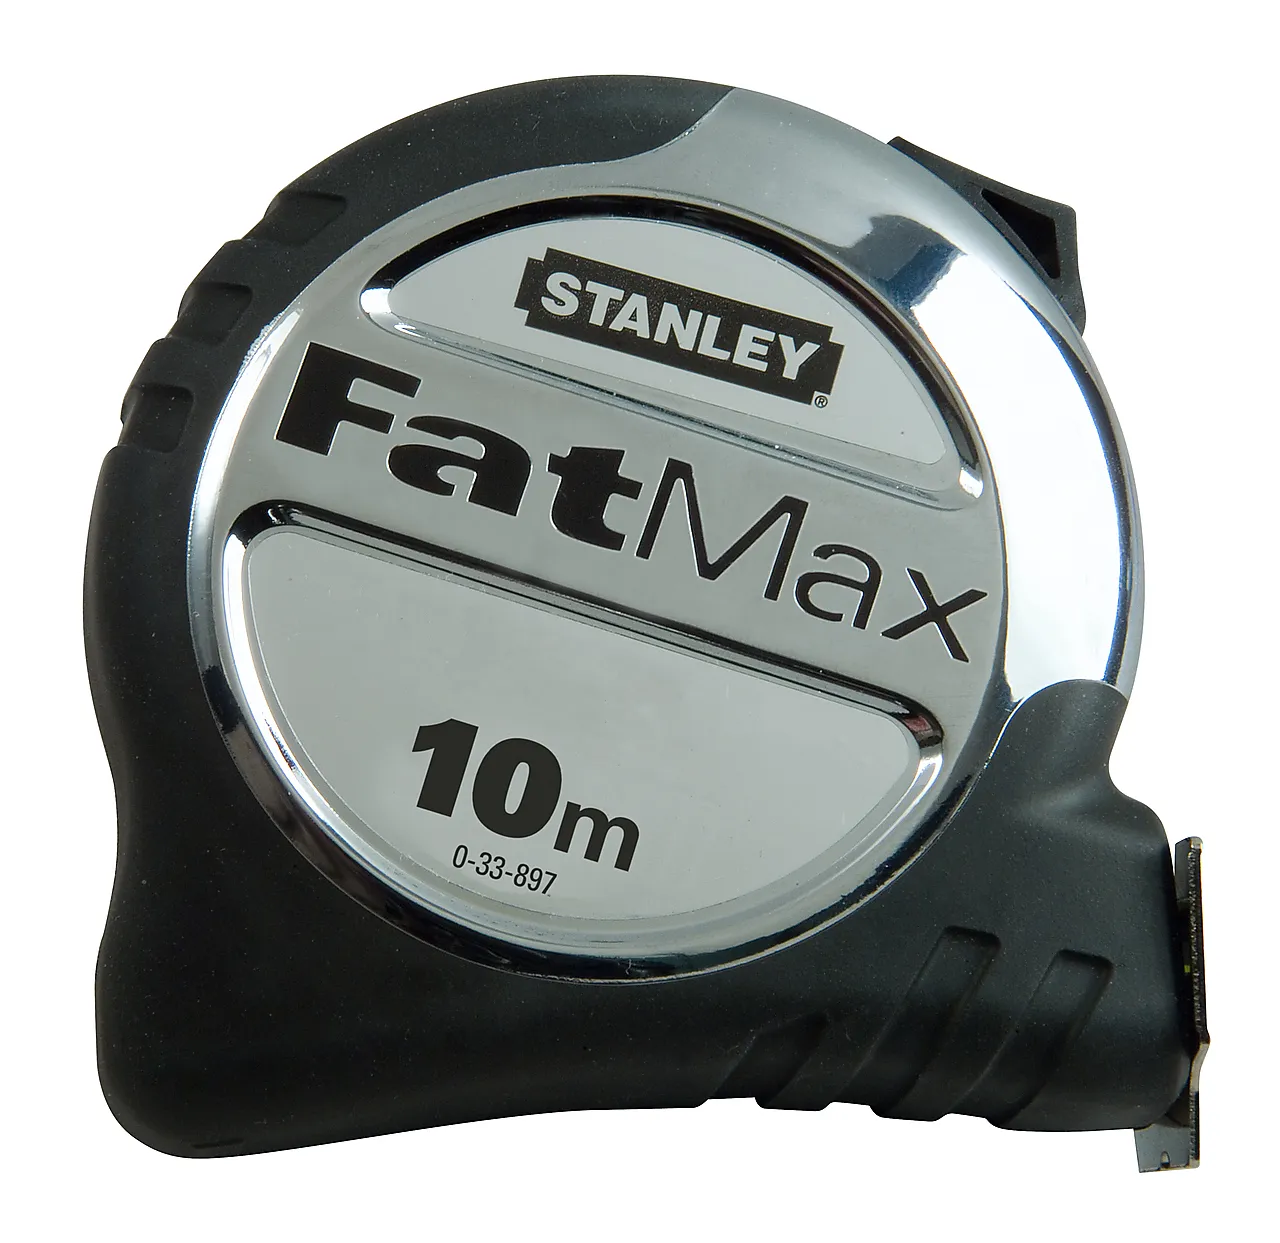 Målebånd fatmax xl 0-33-897 10 m null - null - 2 - Miniatyr